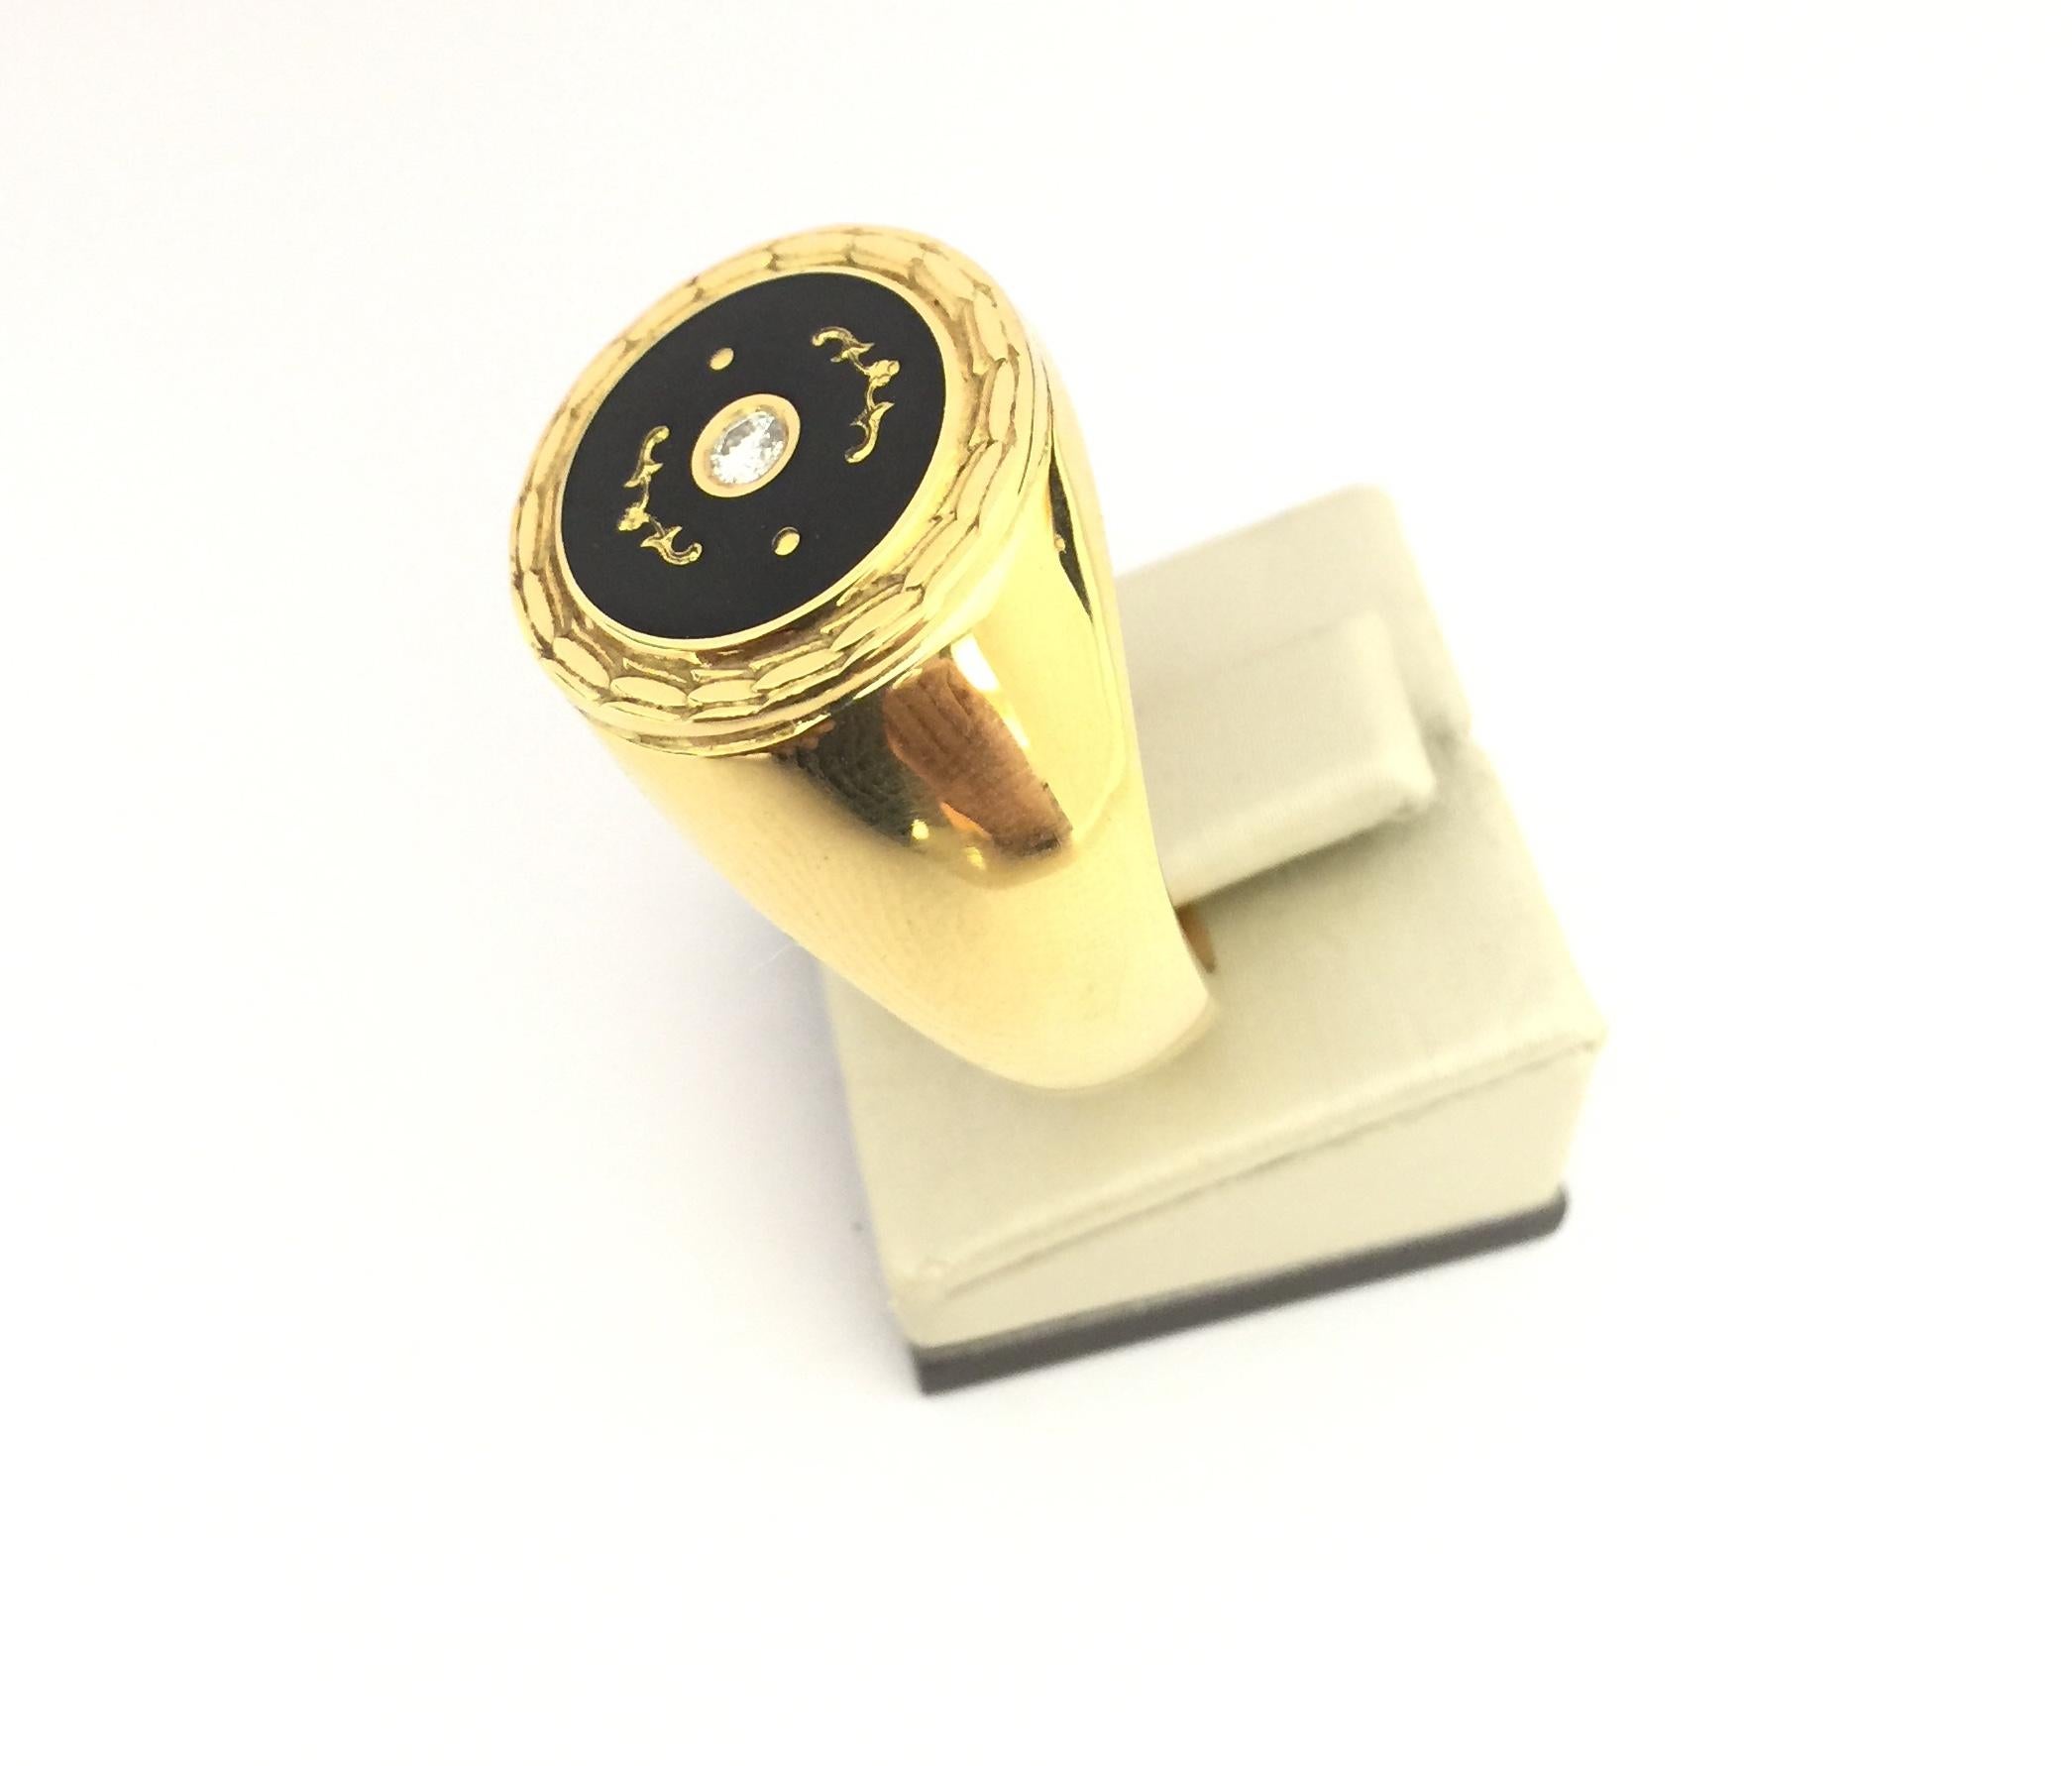 Faberge Men's Diamond Ring.
18k Yellow Gold 
Diamond 0.05cts 
Black Enamel
Size 10
F2325SW